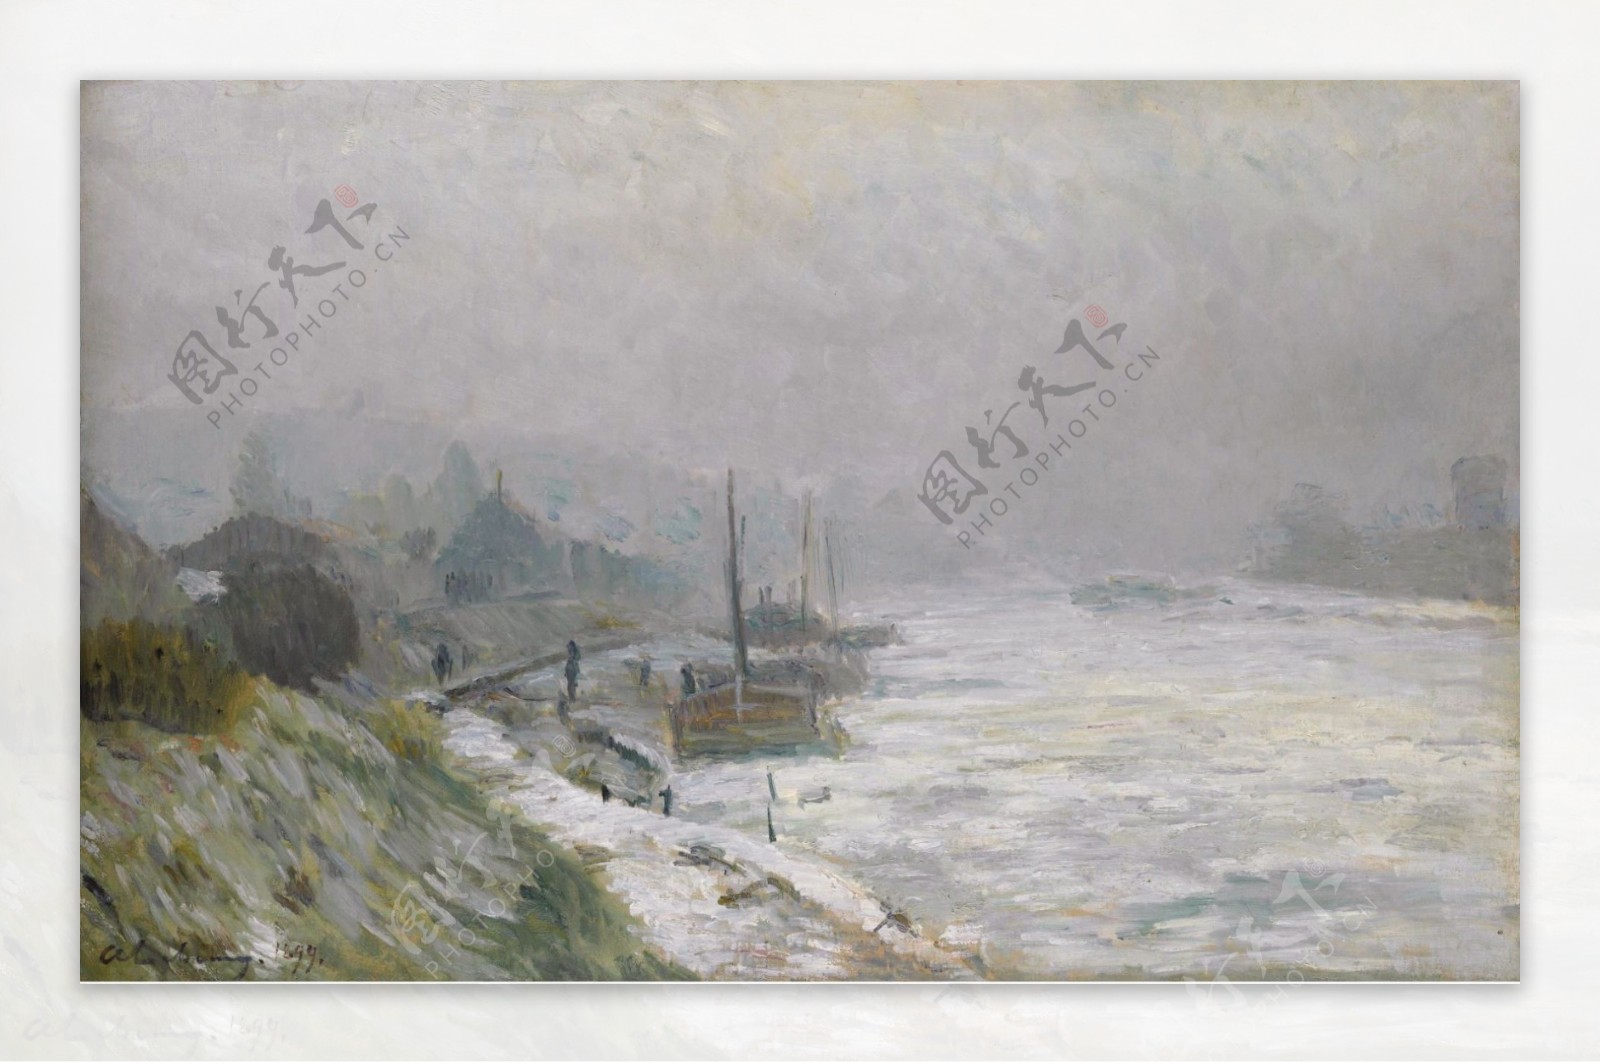 AlbertLebourgTheSeineinWinter1899法国画家阿尔伯特勒堡AlbertLebourg印象派风景自然山水油画装饰画